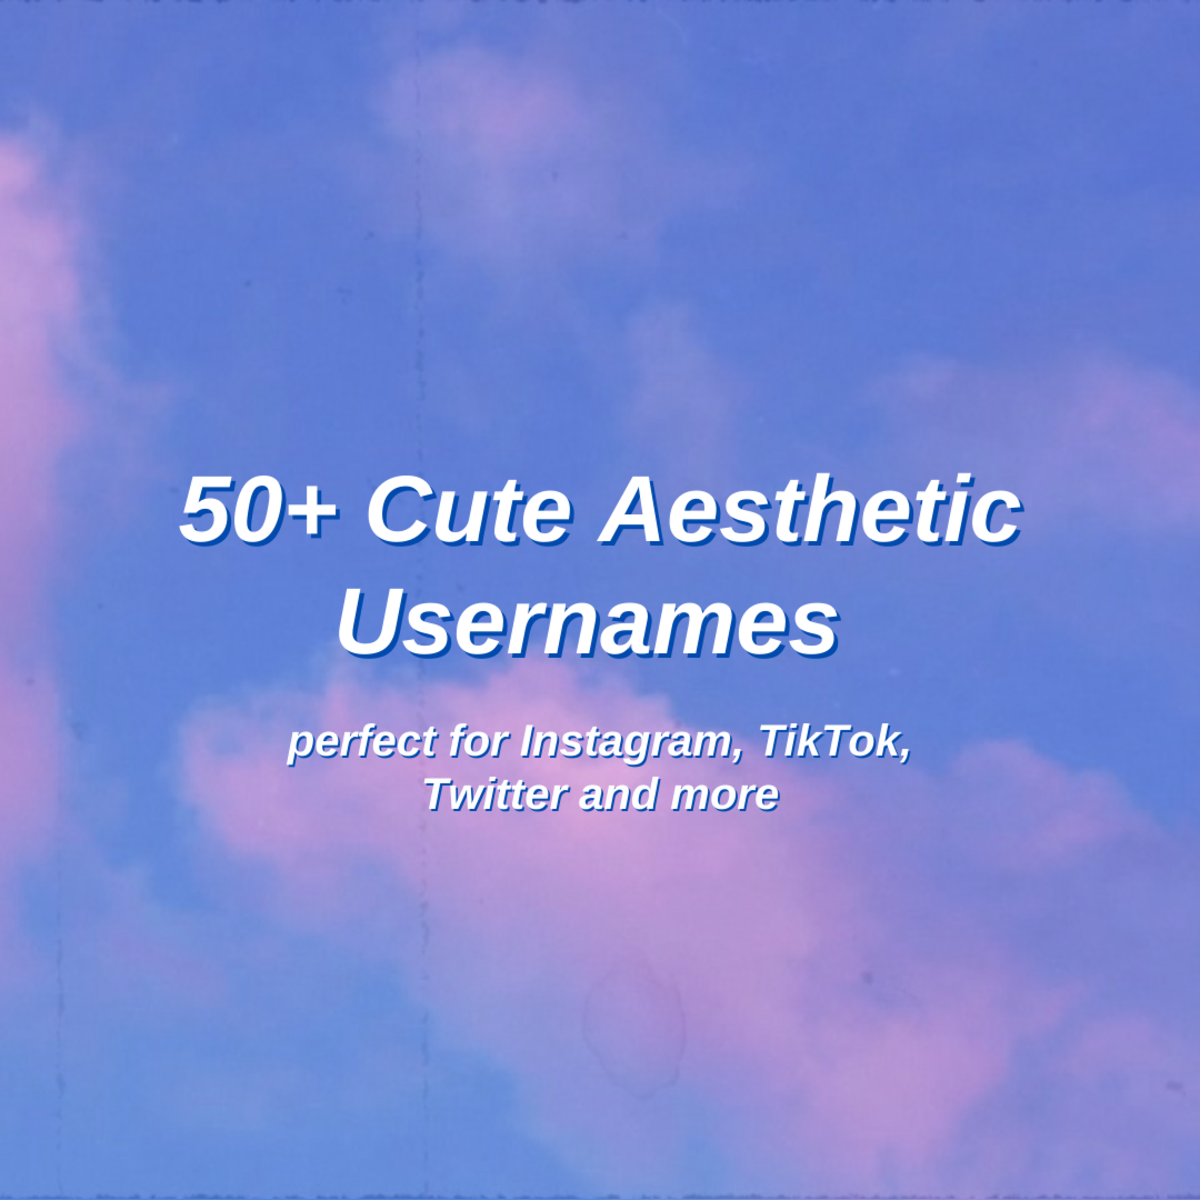 50+ Cute Aesthetic Username Ideas: The Ultimate List